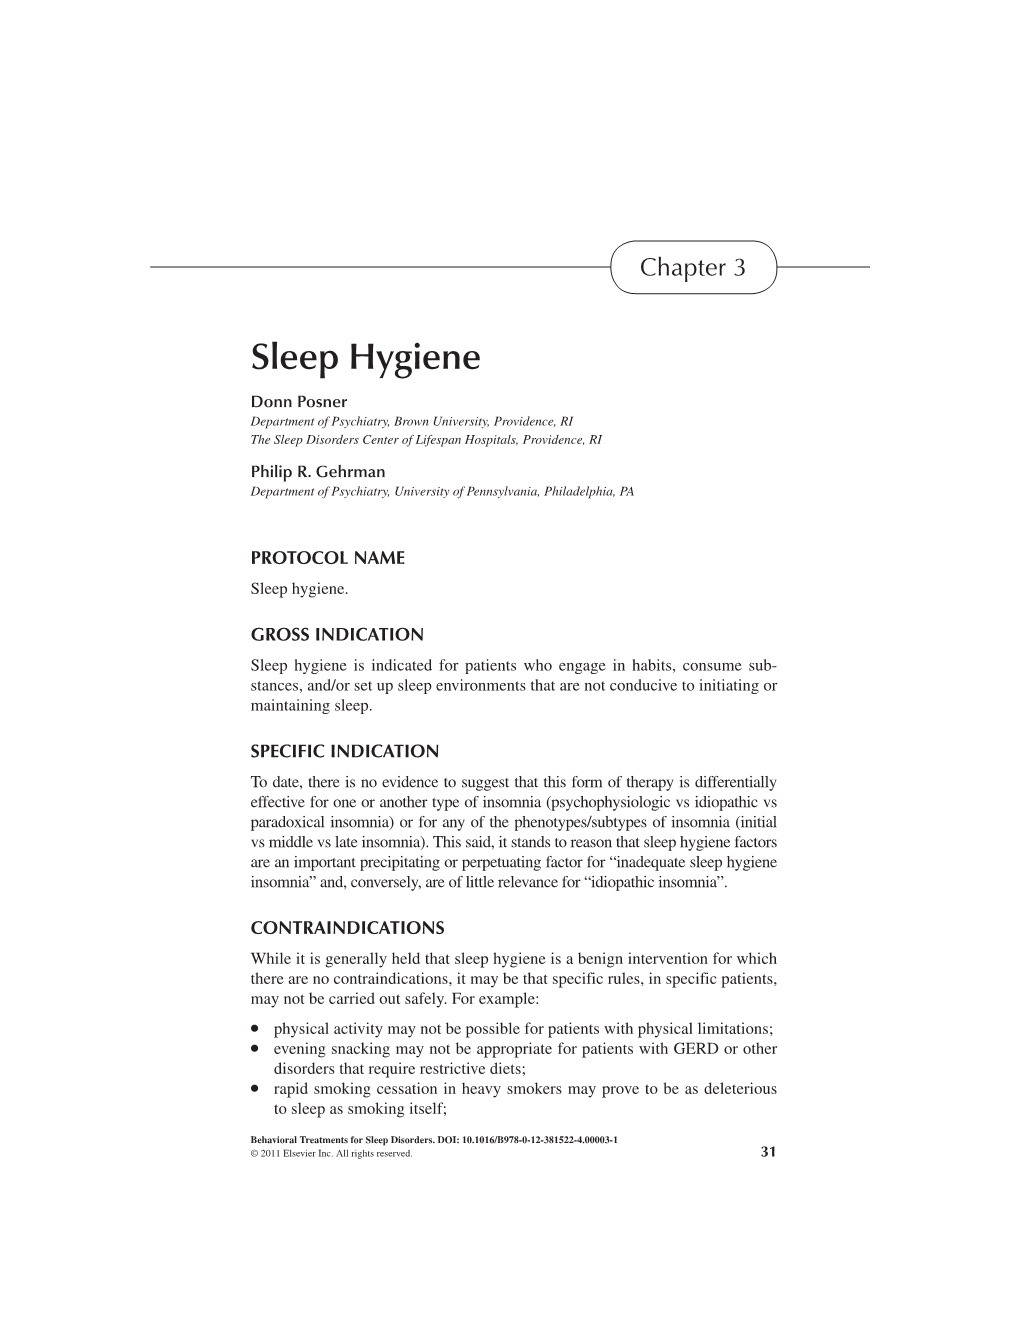 Sleep Hygiene Donn Posner Department of Psychiatry, Brown University, Providence, RI the Sleep Disorders Center of Lifespan Hospitals, Providence, RI